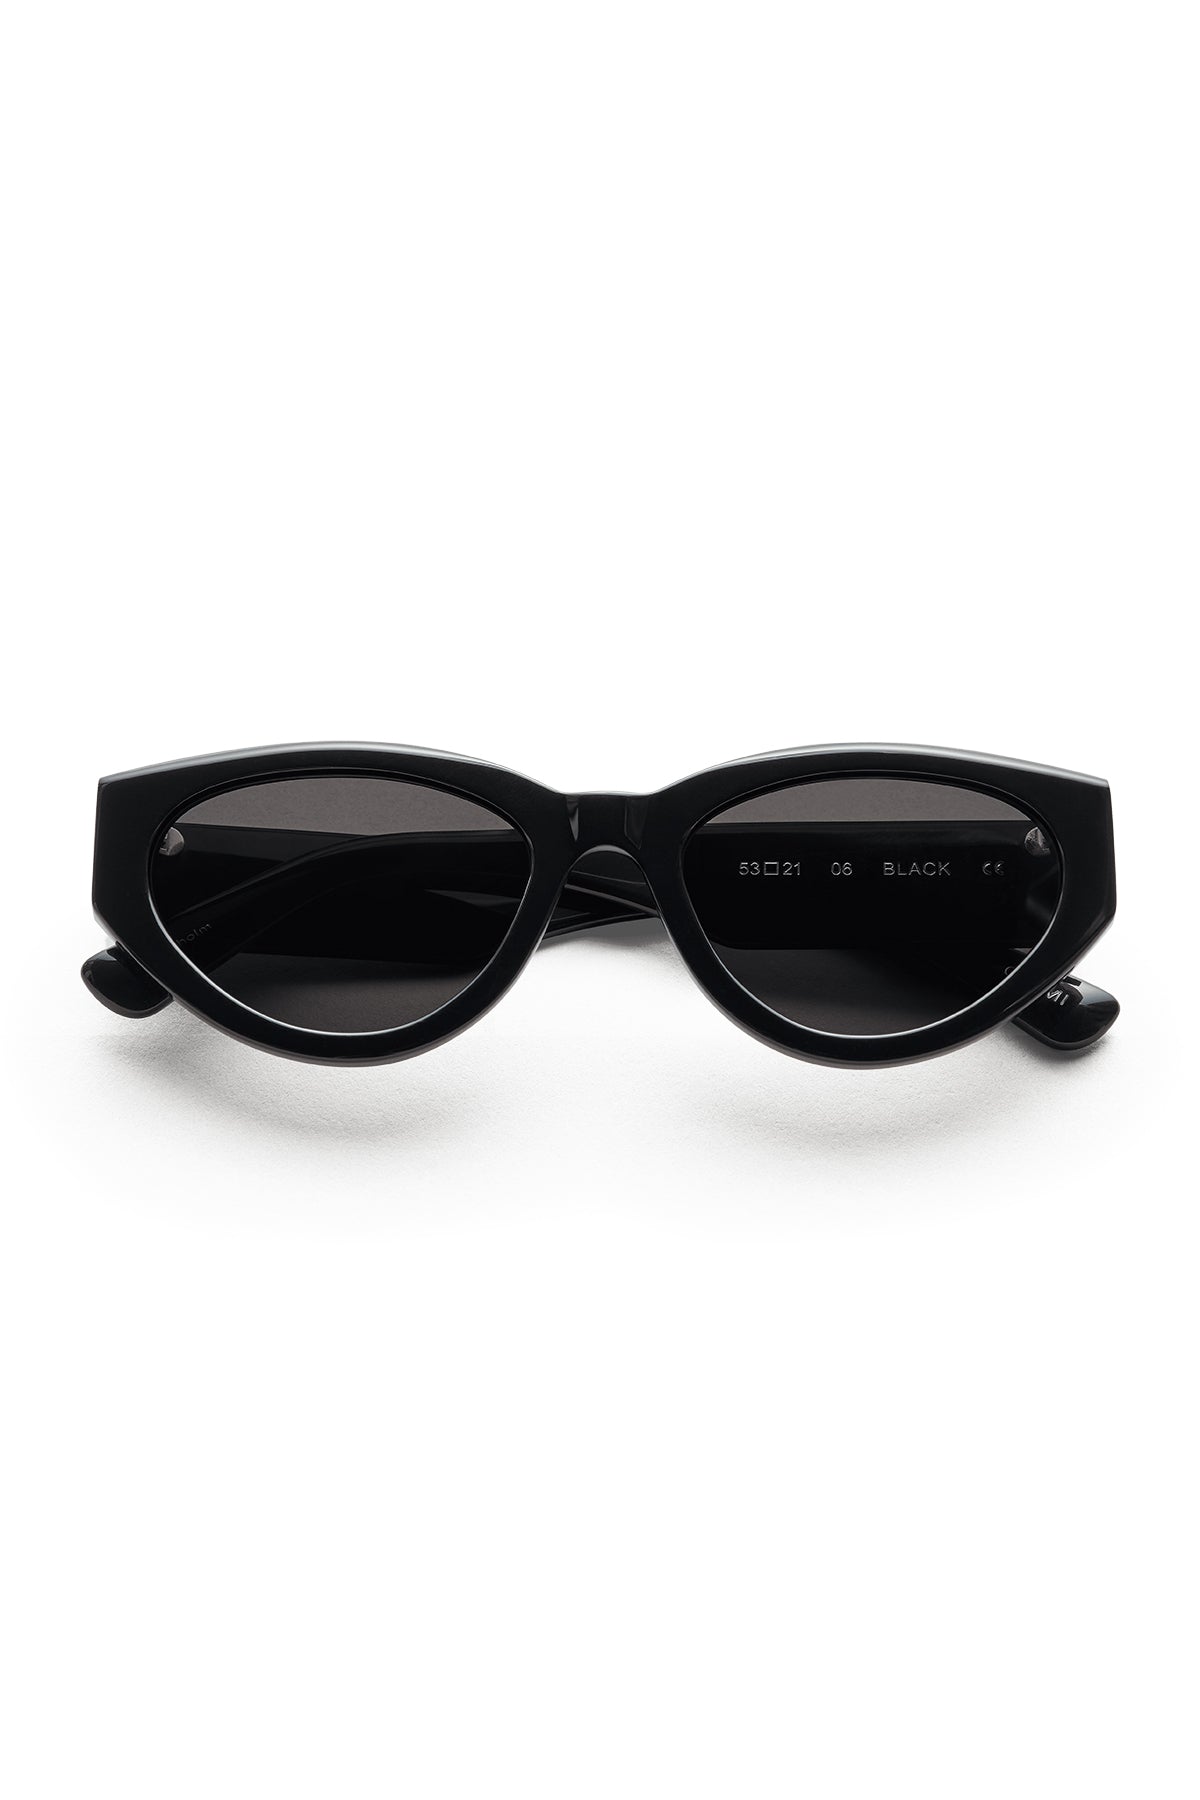 Chimi 06 Sunglasses Black Front-22132967866561